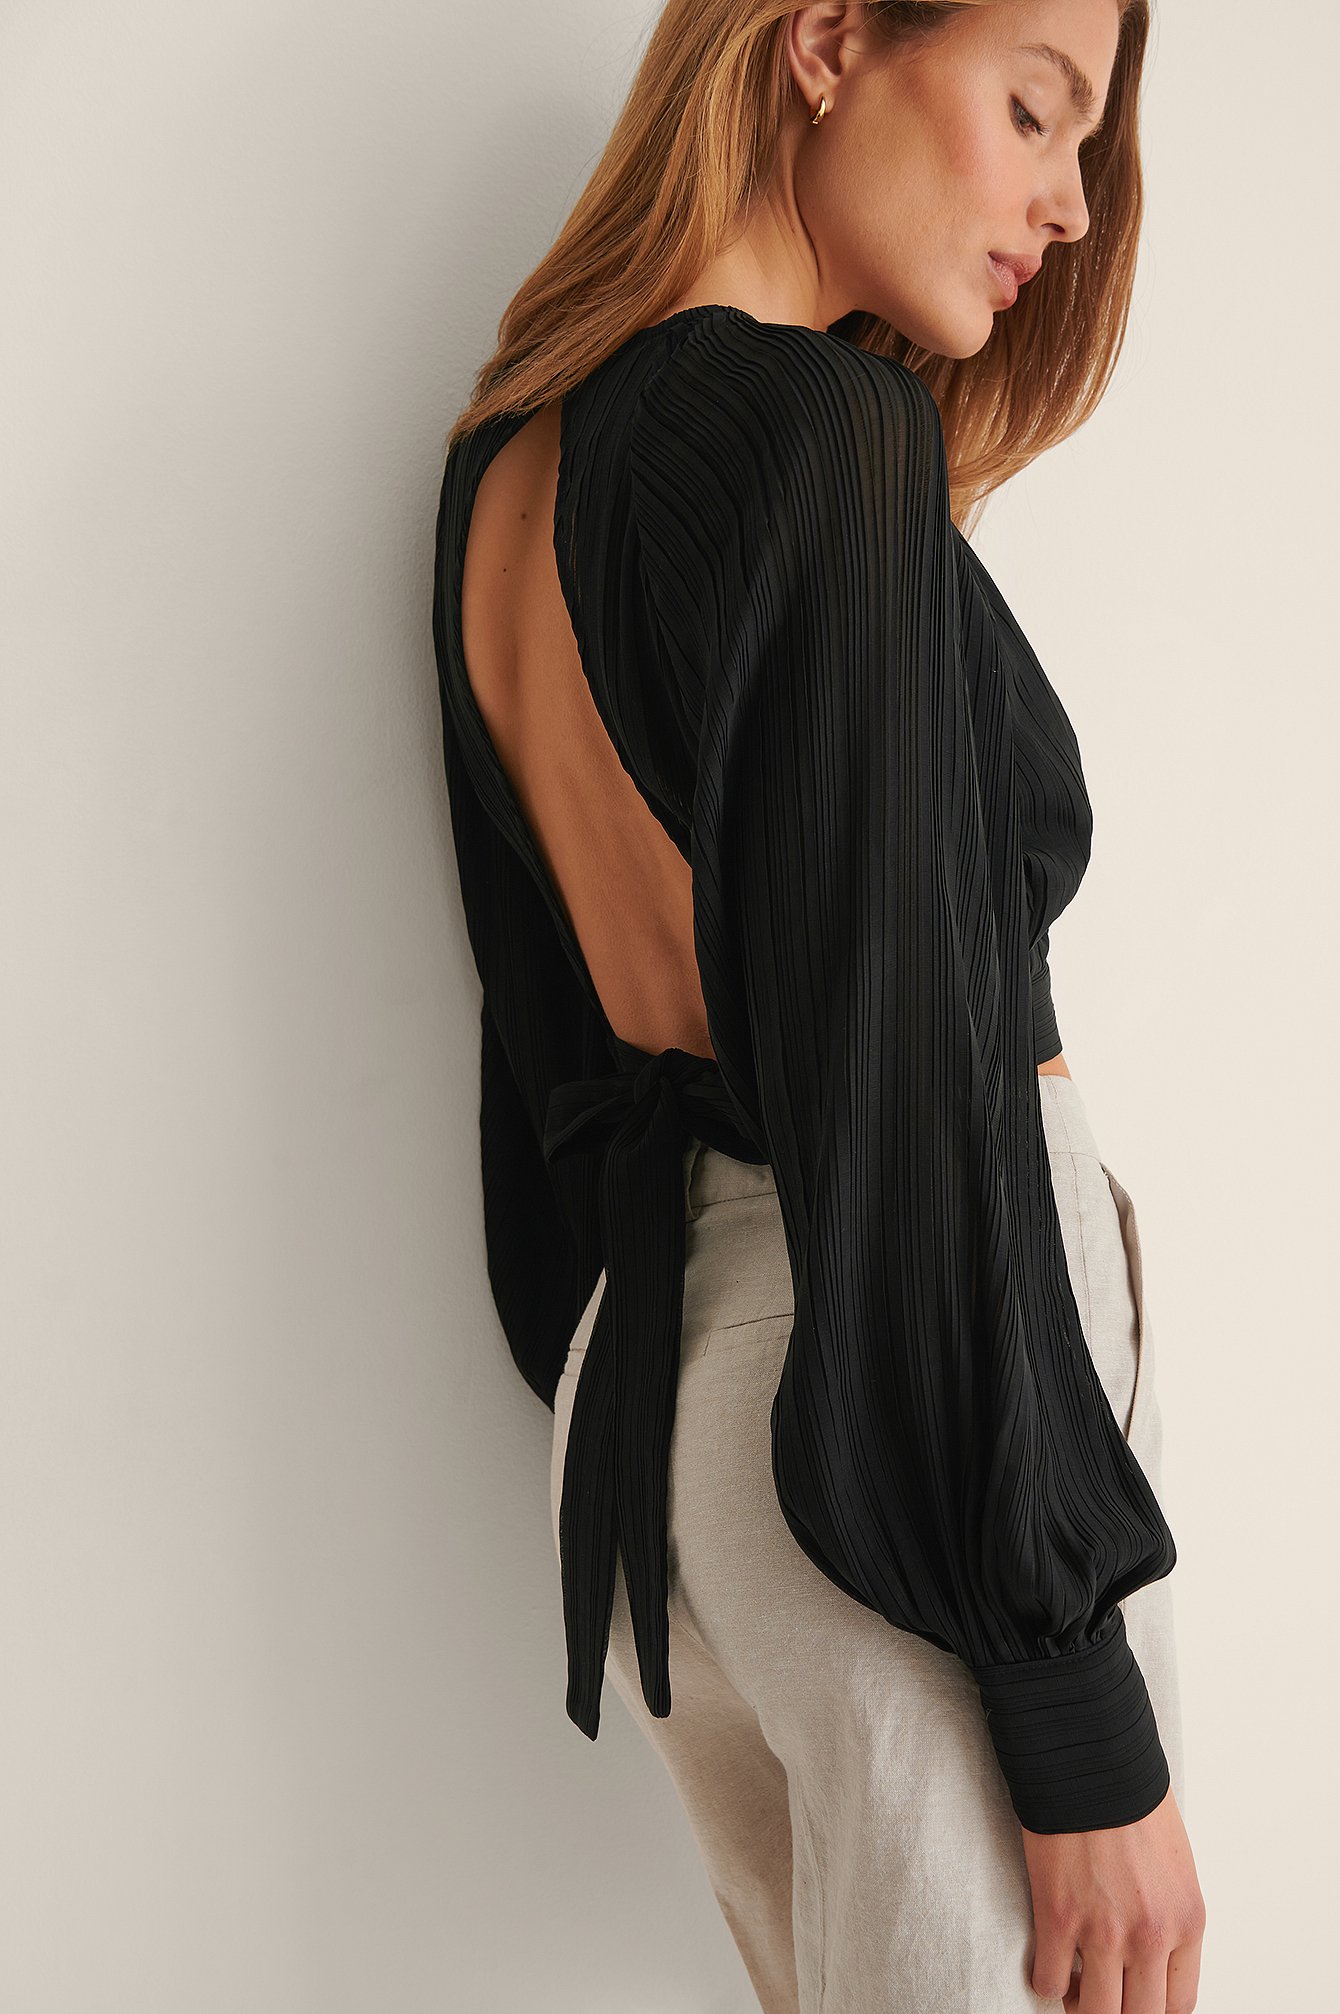 Barmhartig Toegeven stikstof Geplisseerde blouse met open rug Zwart | NA-KD